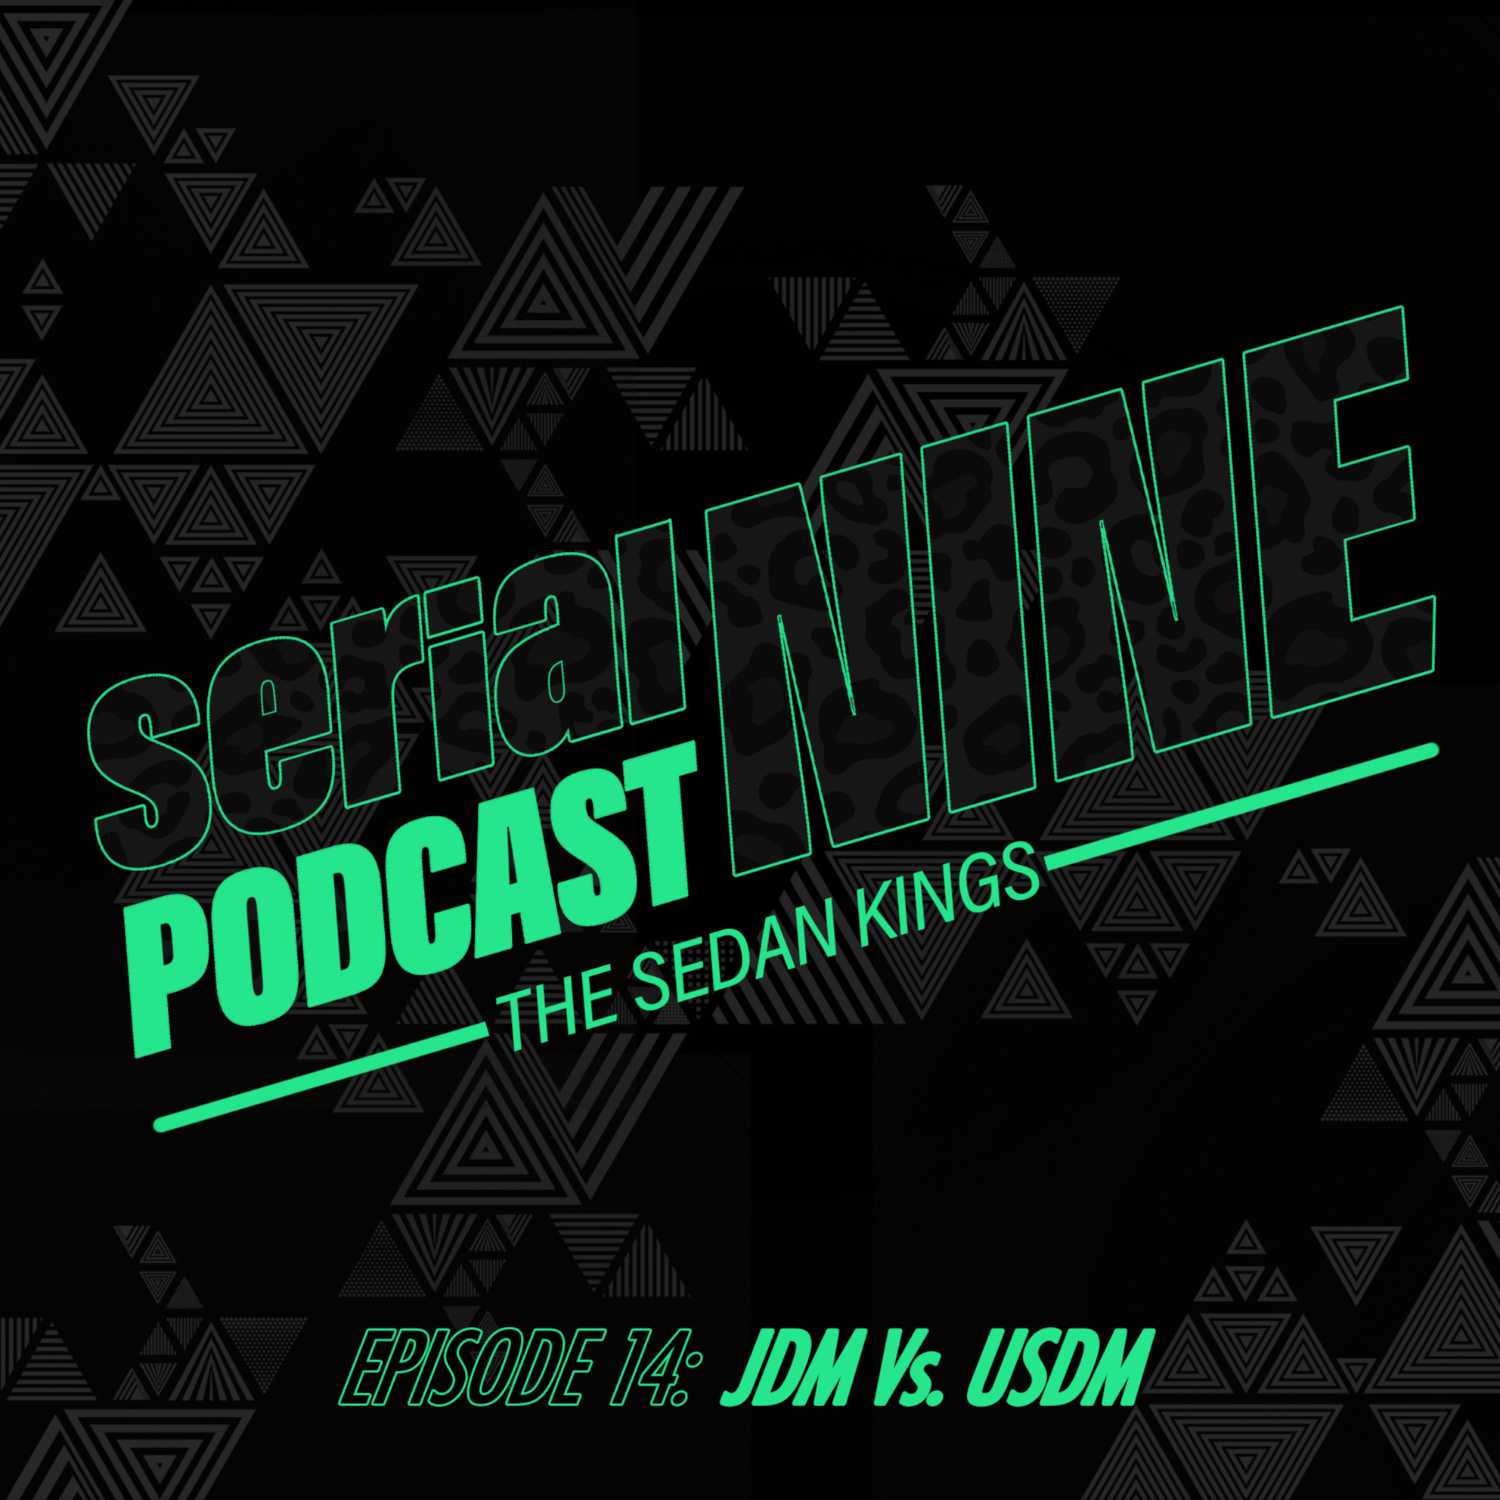 SerialPodcastNine Episode 14 USDM Cars on the SERIALNINE Podcast